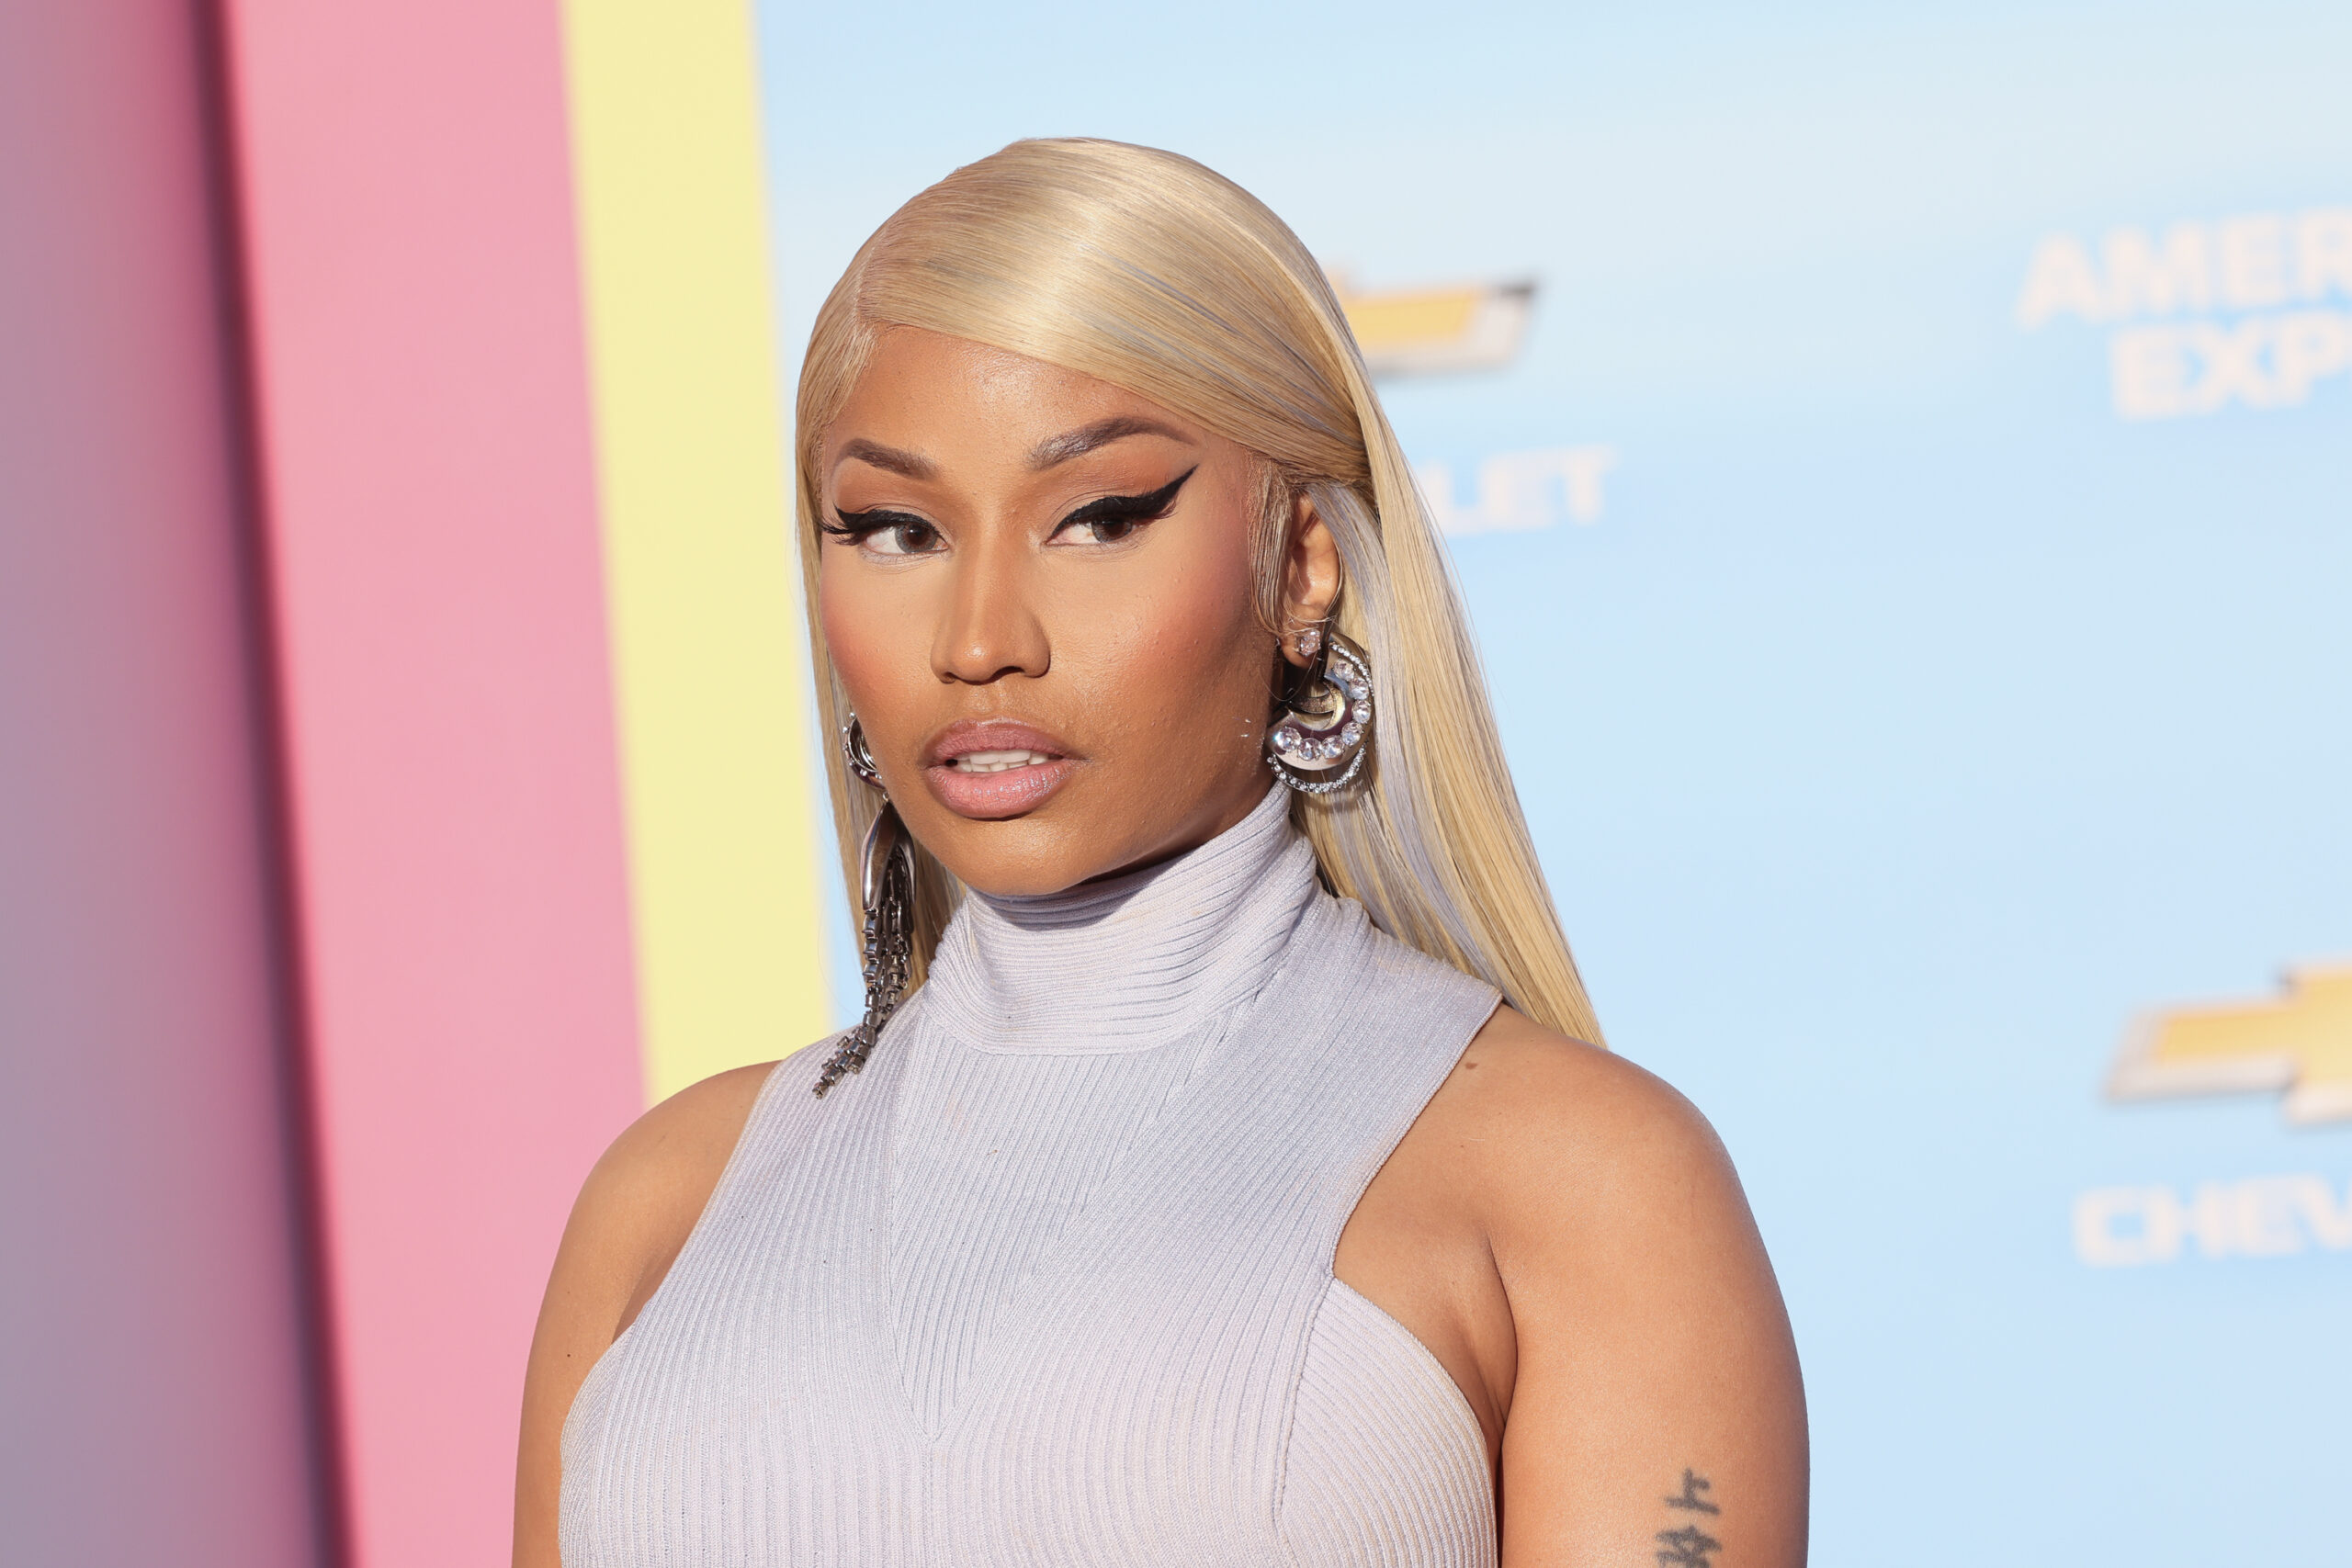 Nicki Minaj Shares “Pink Friday 2” Snippets, Hyping Up Fans For Album